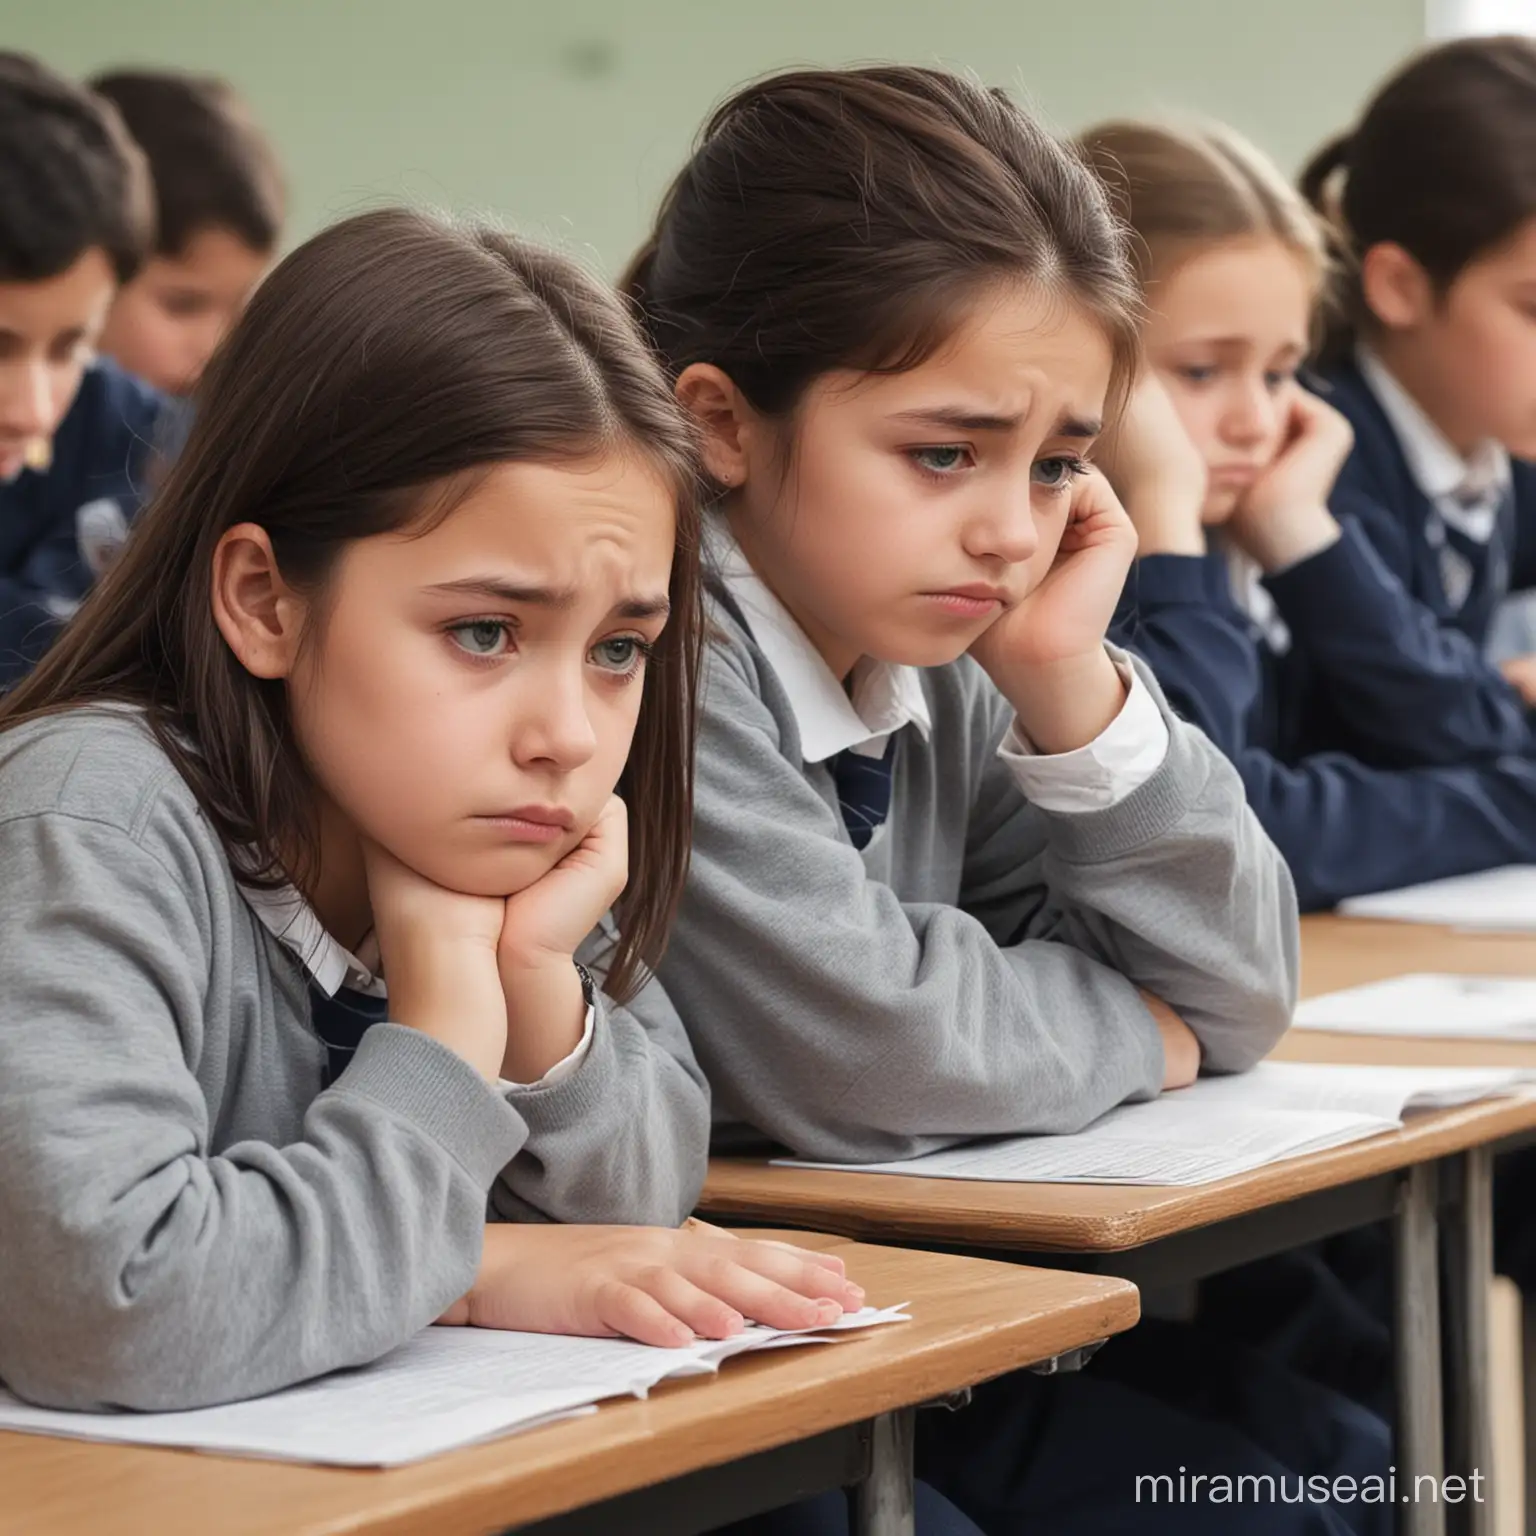 Sad Children Sitting Together in Classroom